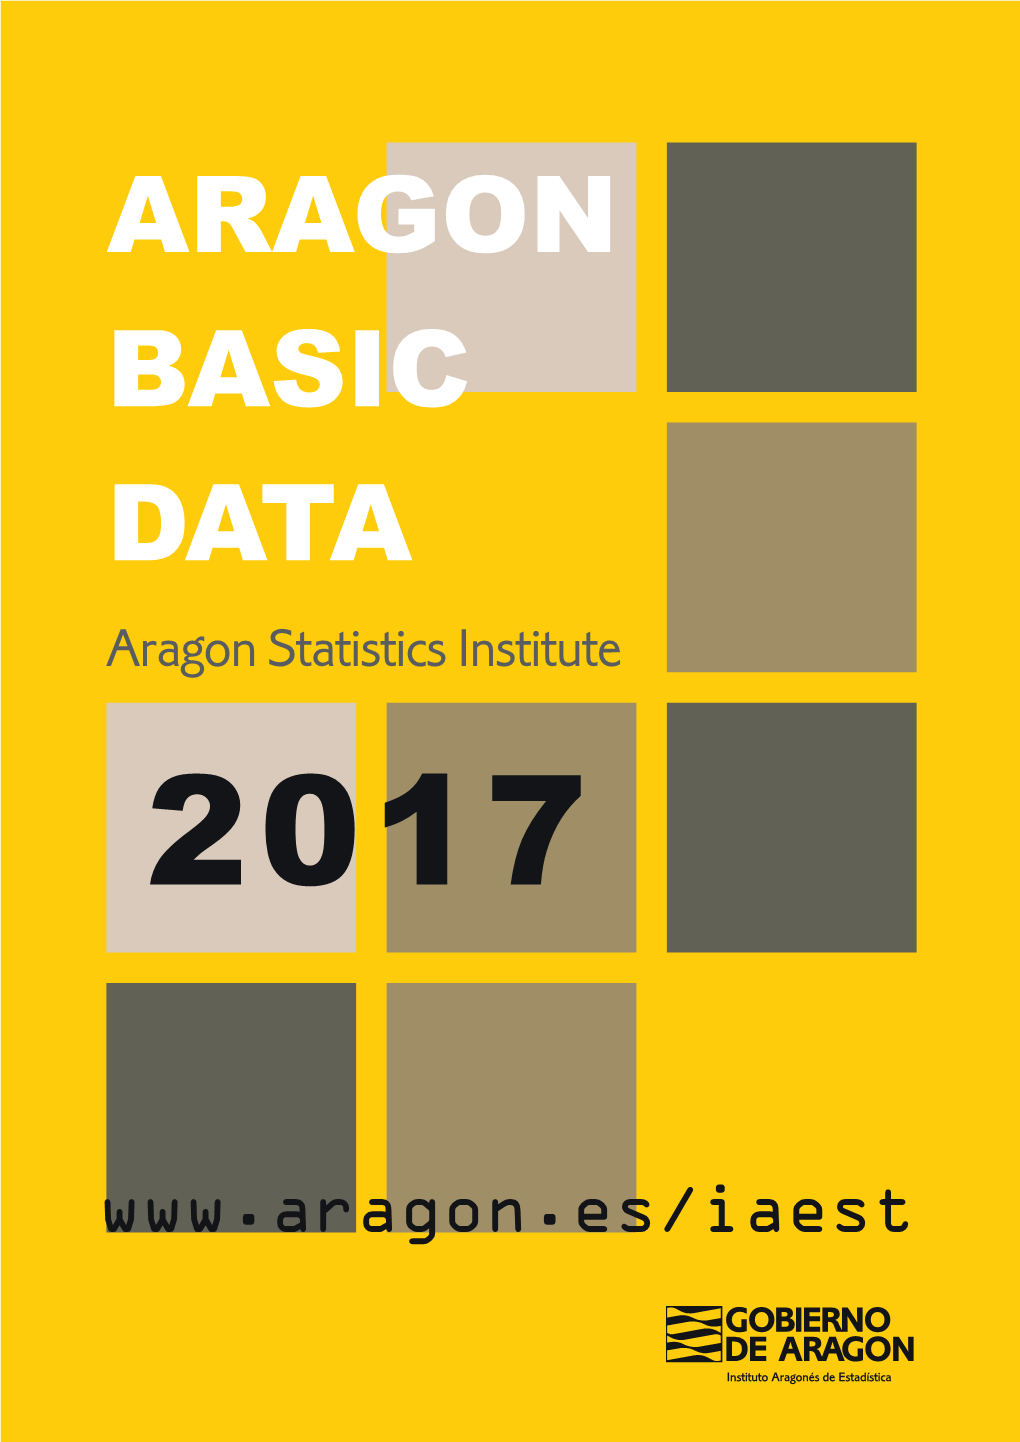 Aragon Basic Data, 2017